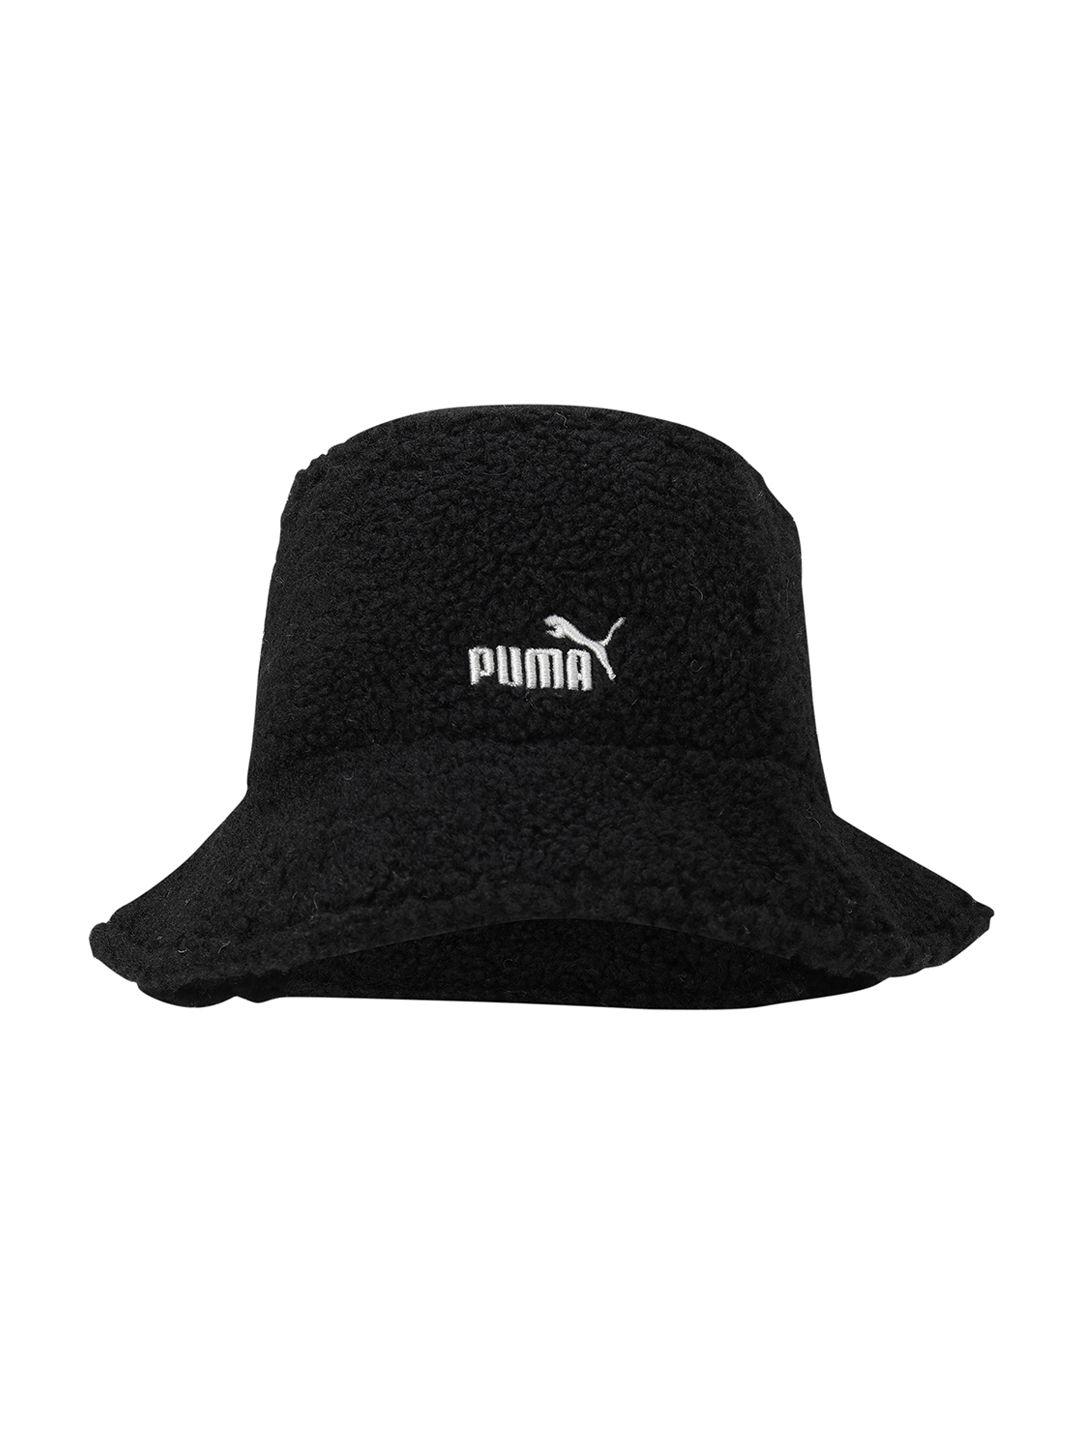 puma-unisex-black-solid-core-winter-bucket-hat